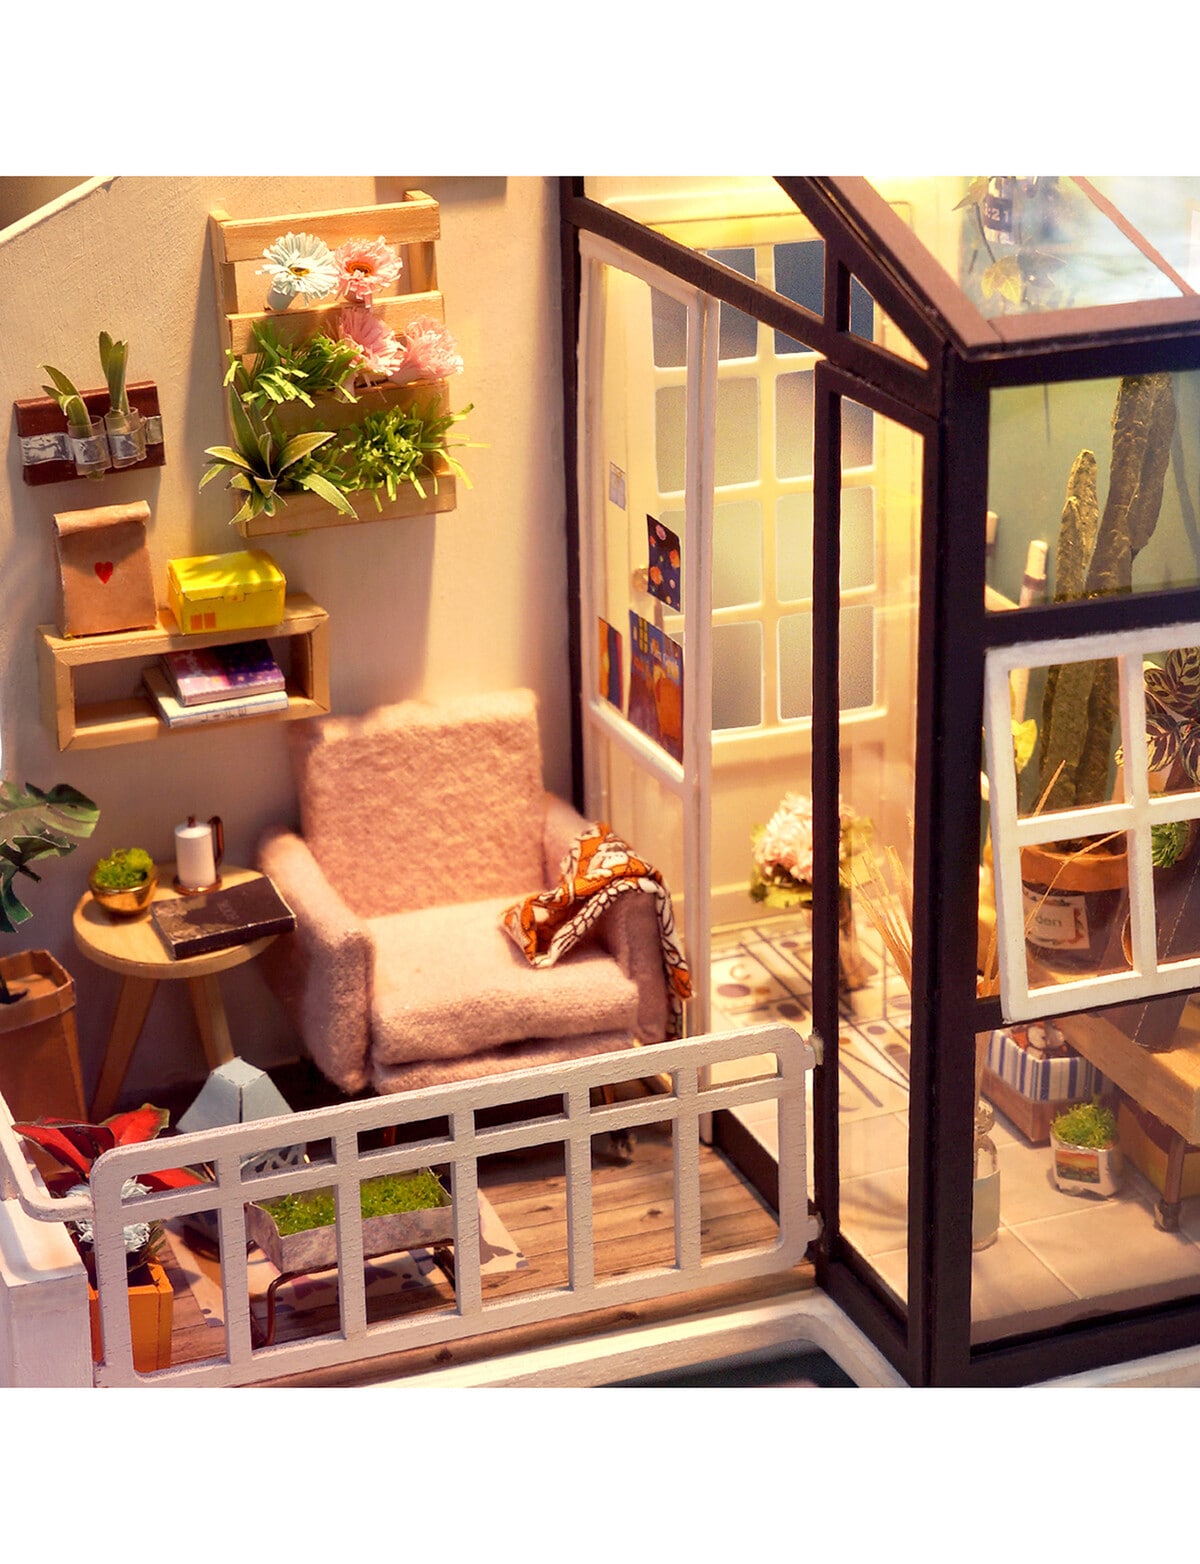 DIY Kits Rolife Miniature House Balcony Day Dreaming - Arts & Crafts